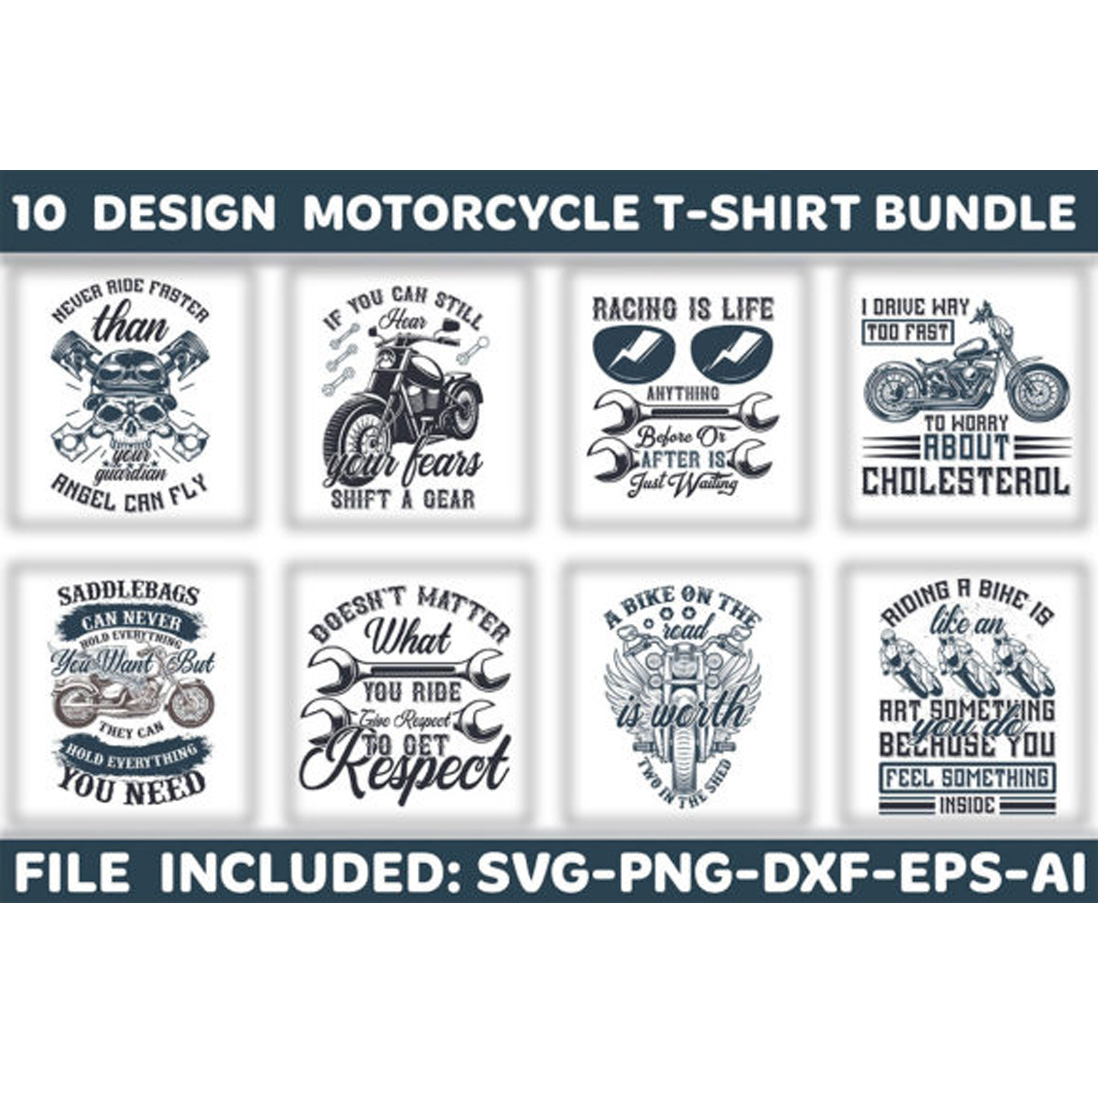 10 Motorcycle T-shirt Design Bundle main cover.